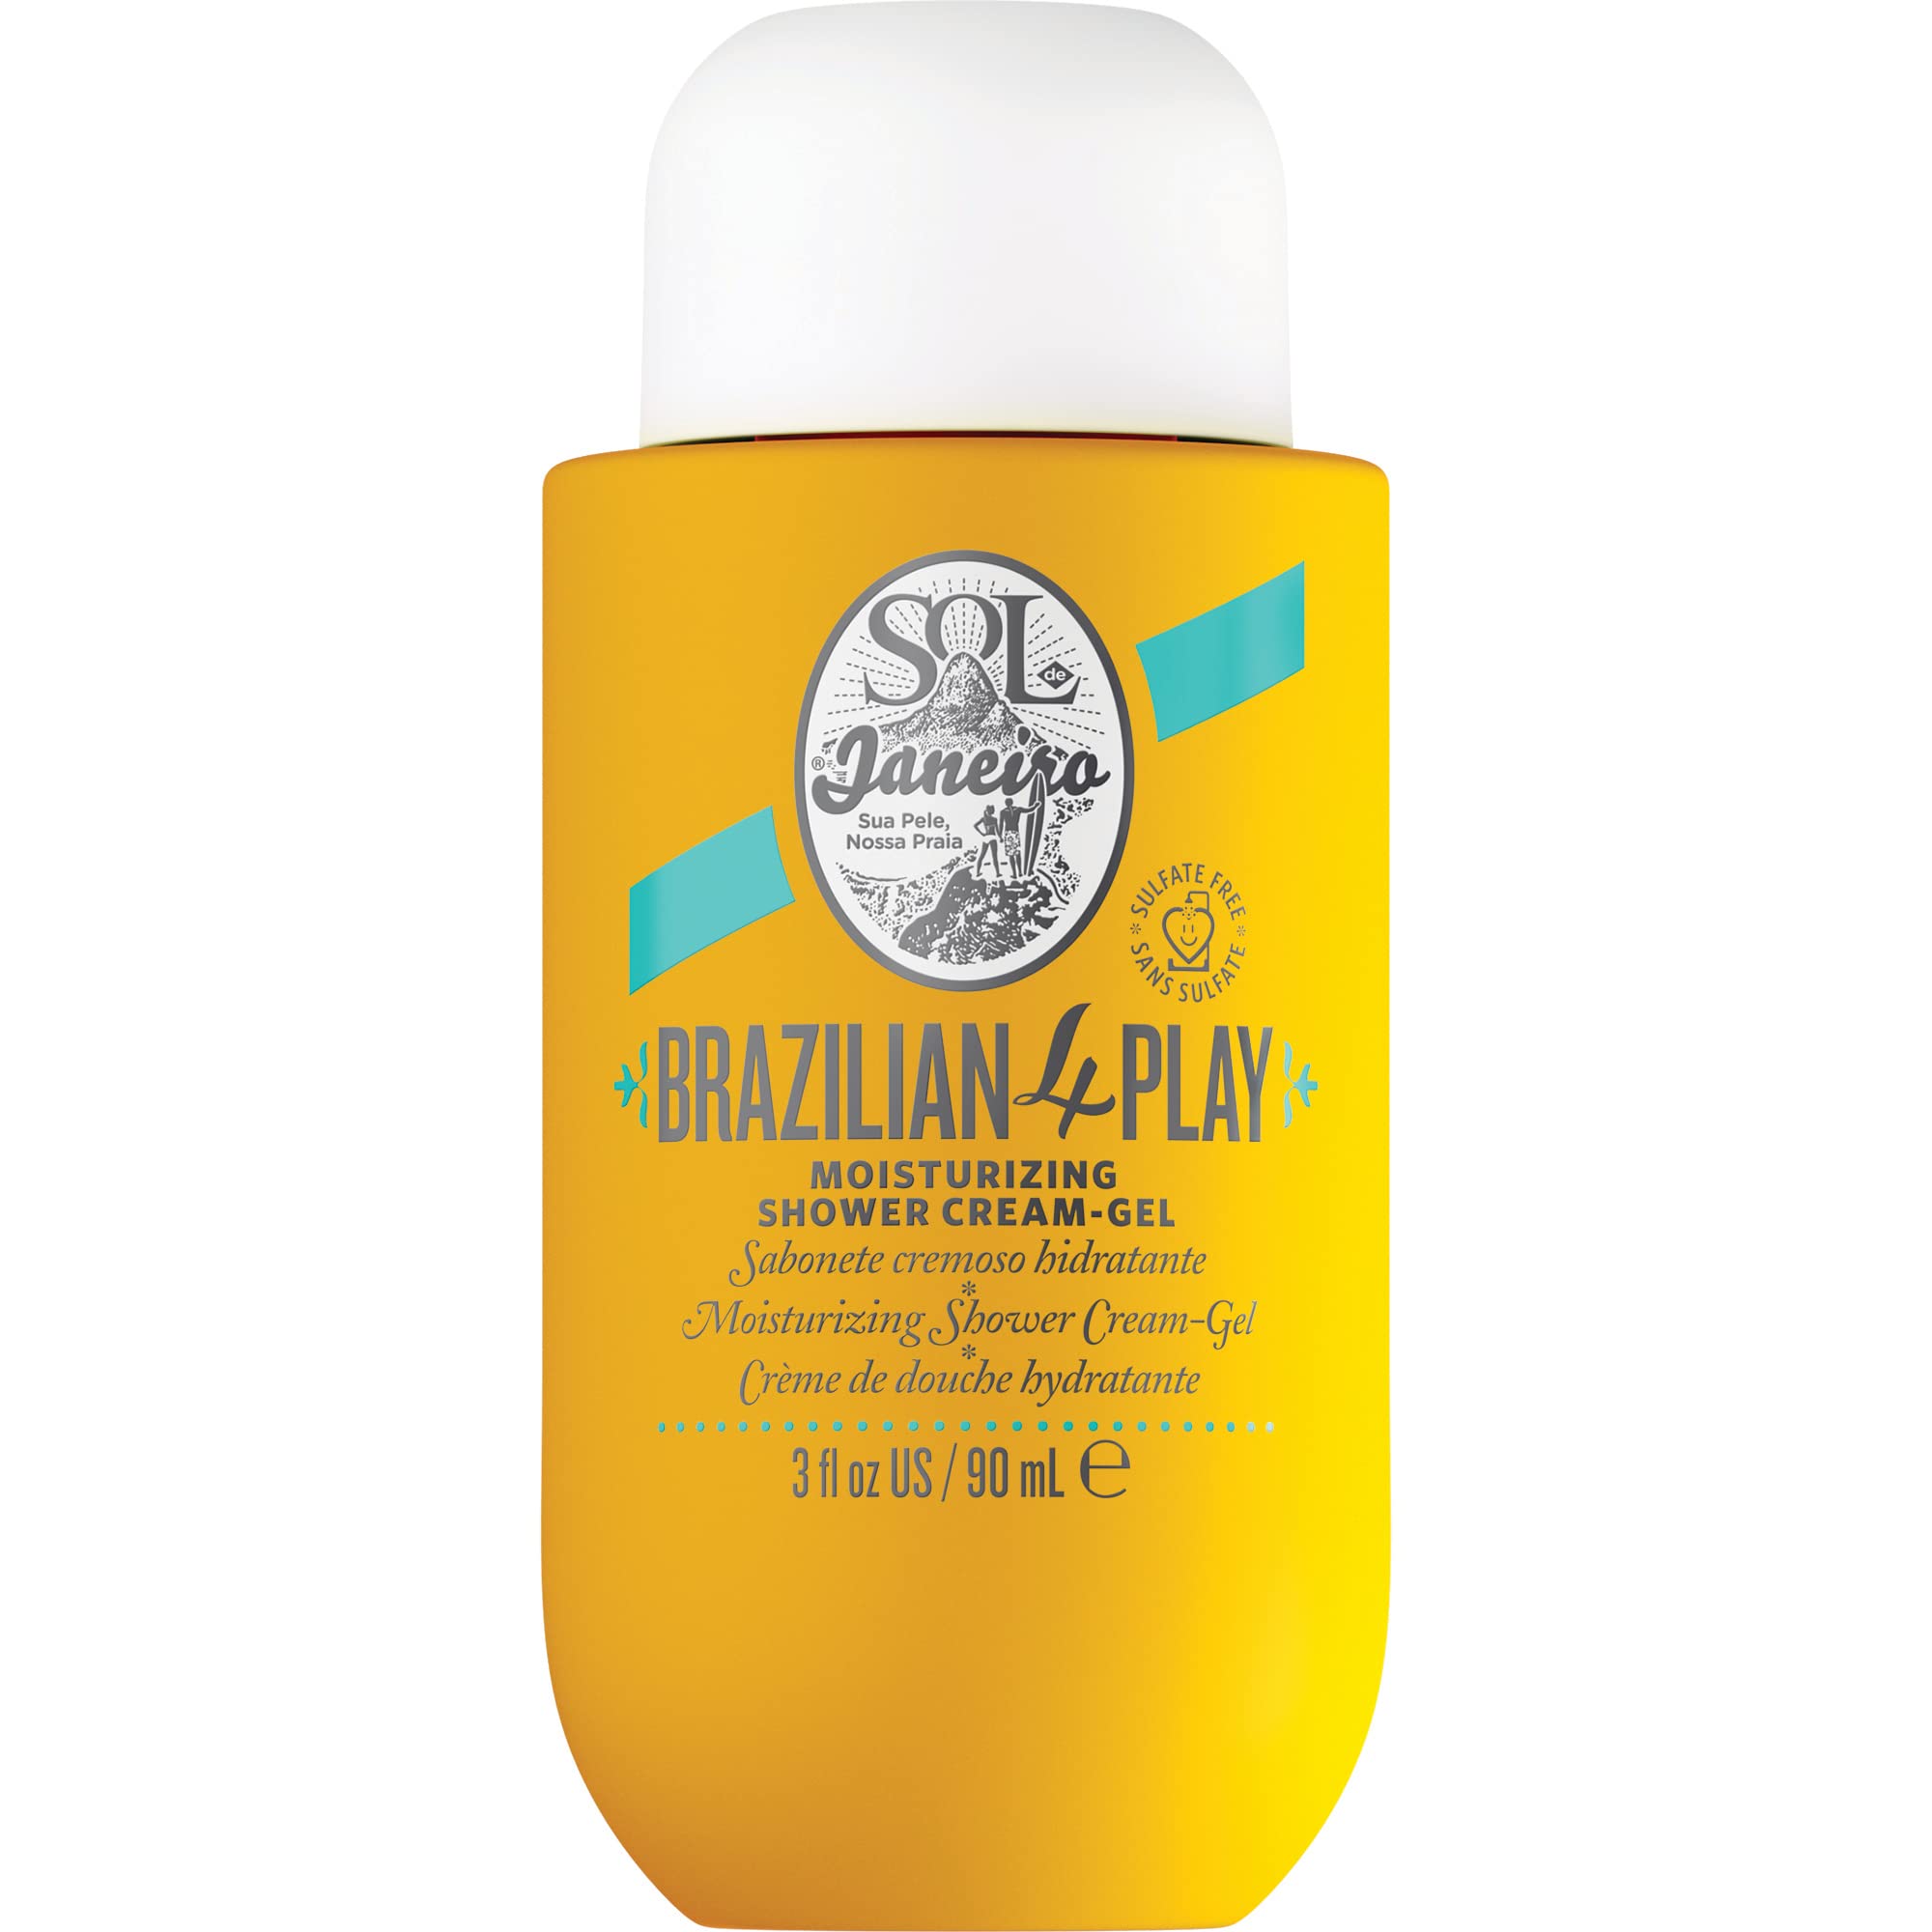 SOL DE JANEIRO 4 Play Moisturizing Shower Cream Gel Body Wash + Brazilian Joia Damage Repairing Shampoo and Conditioner